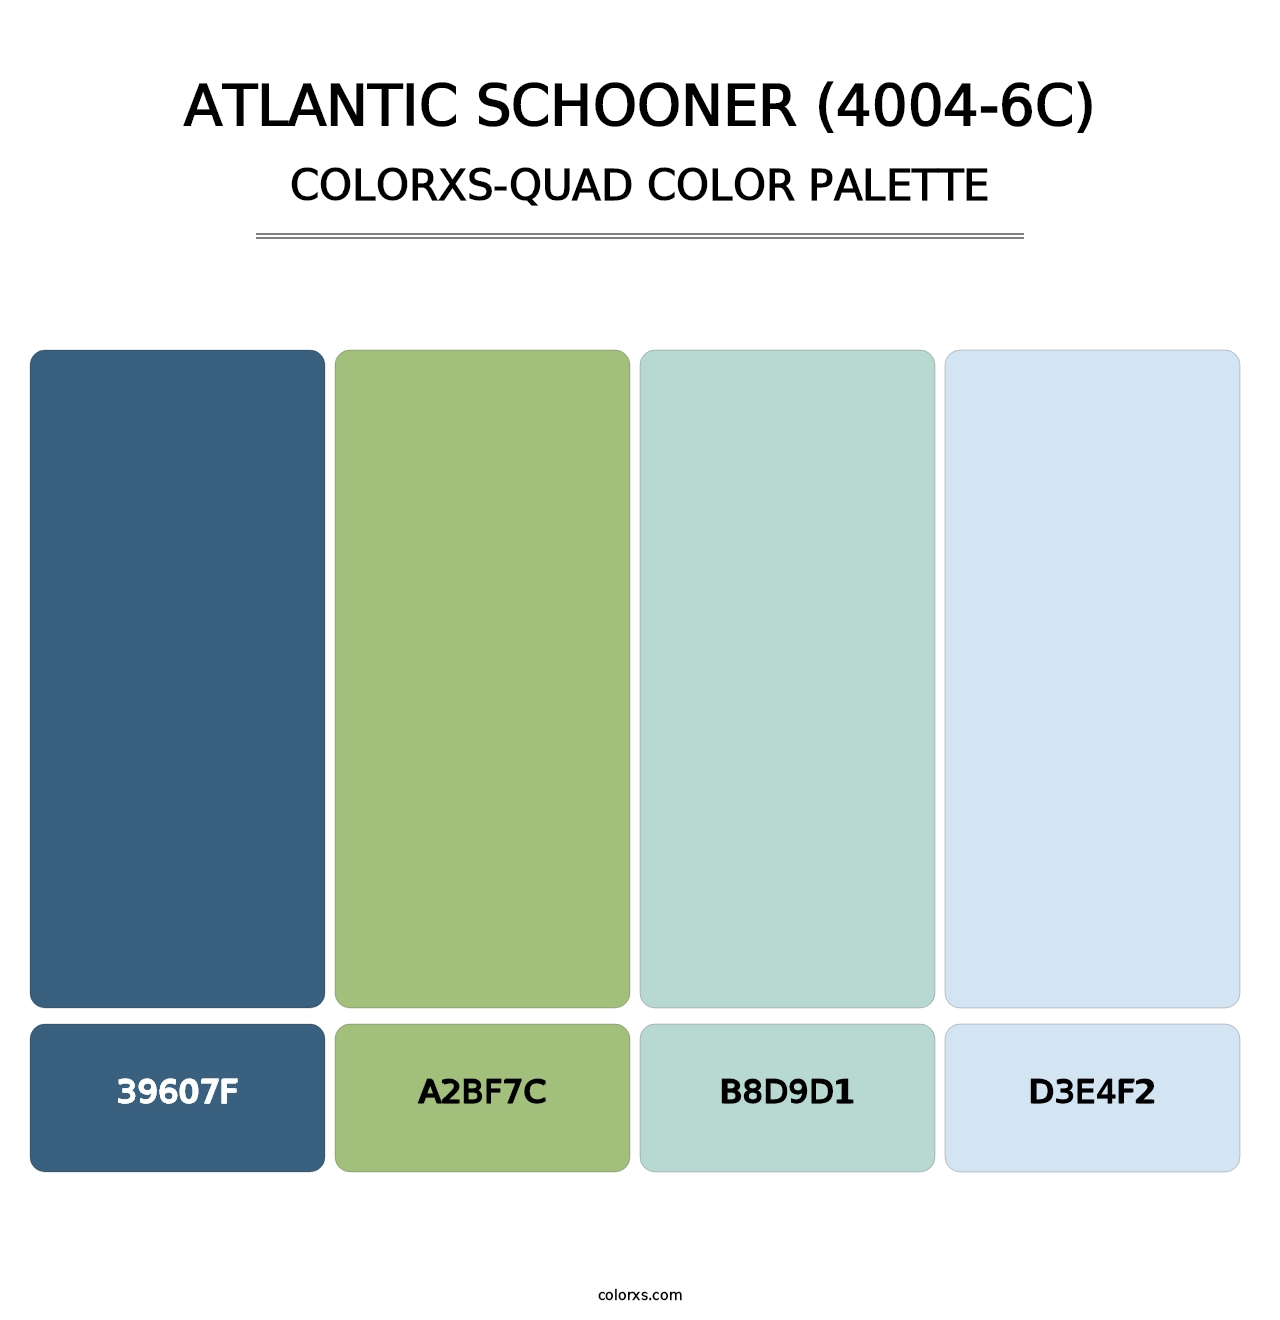 Atlantic Schooner (4004-6C) - Colorxs Quad Palette